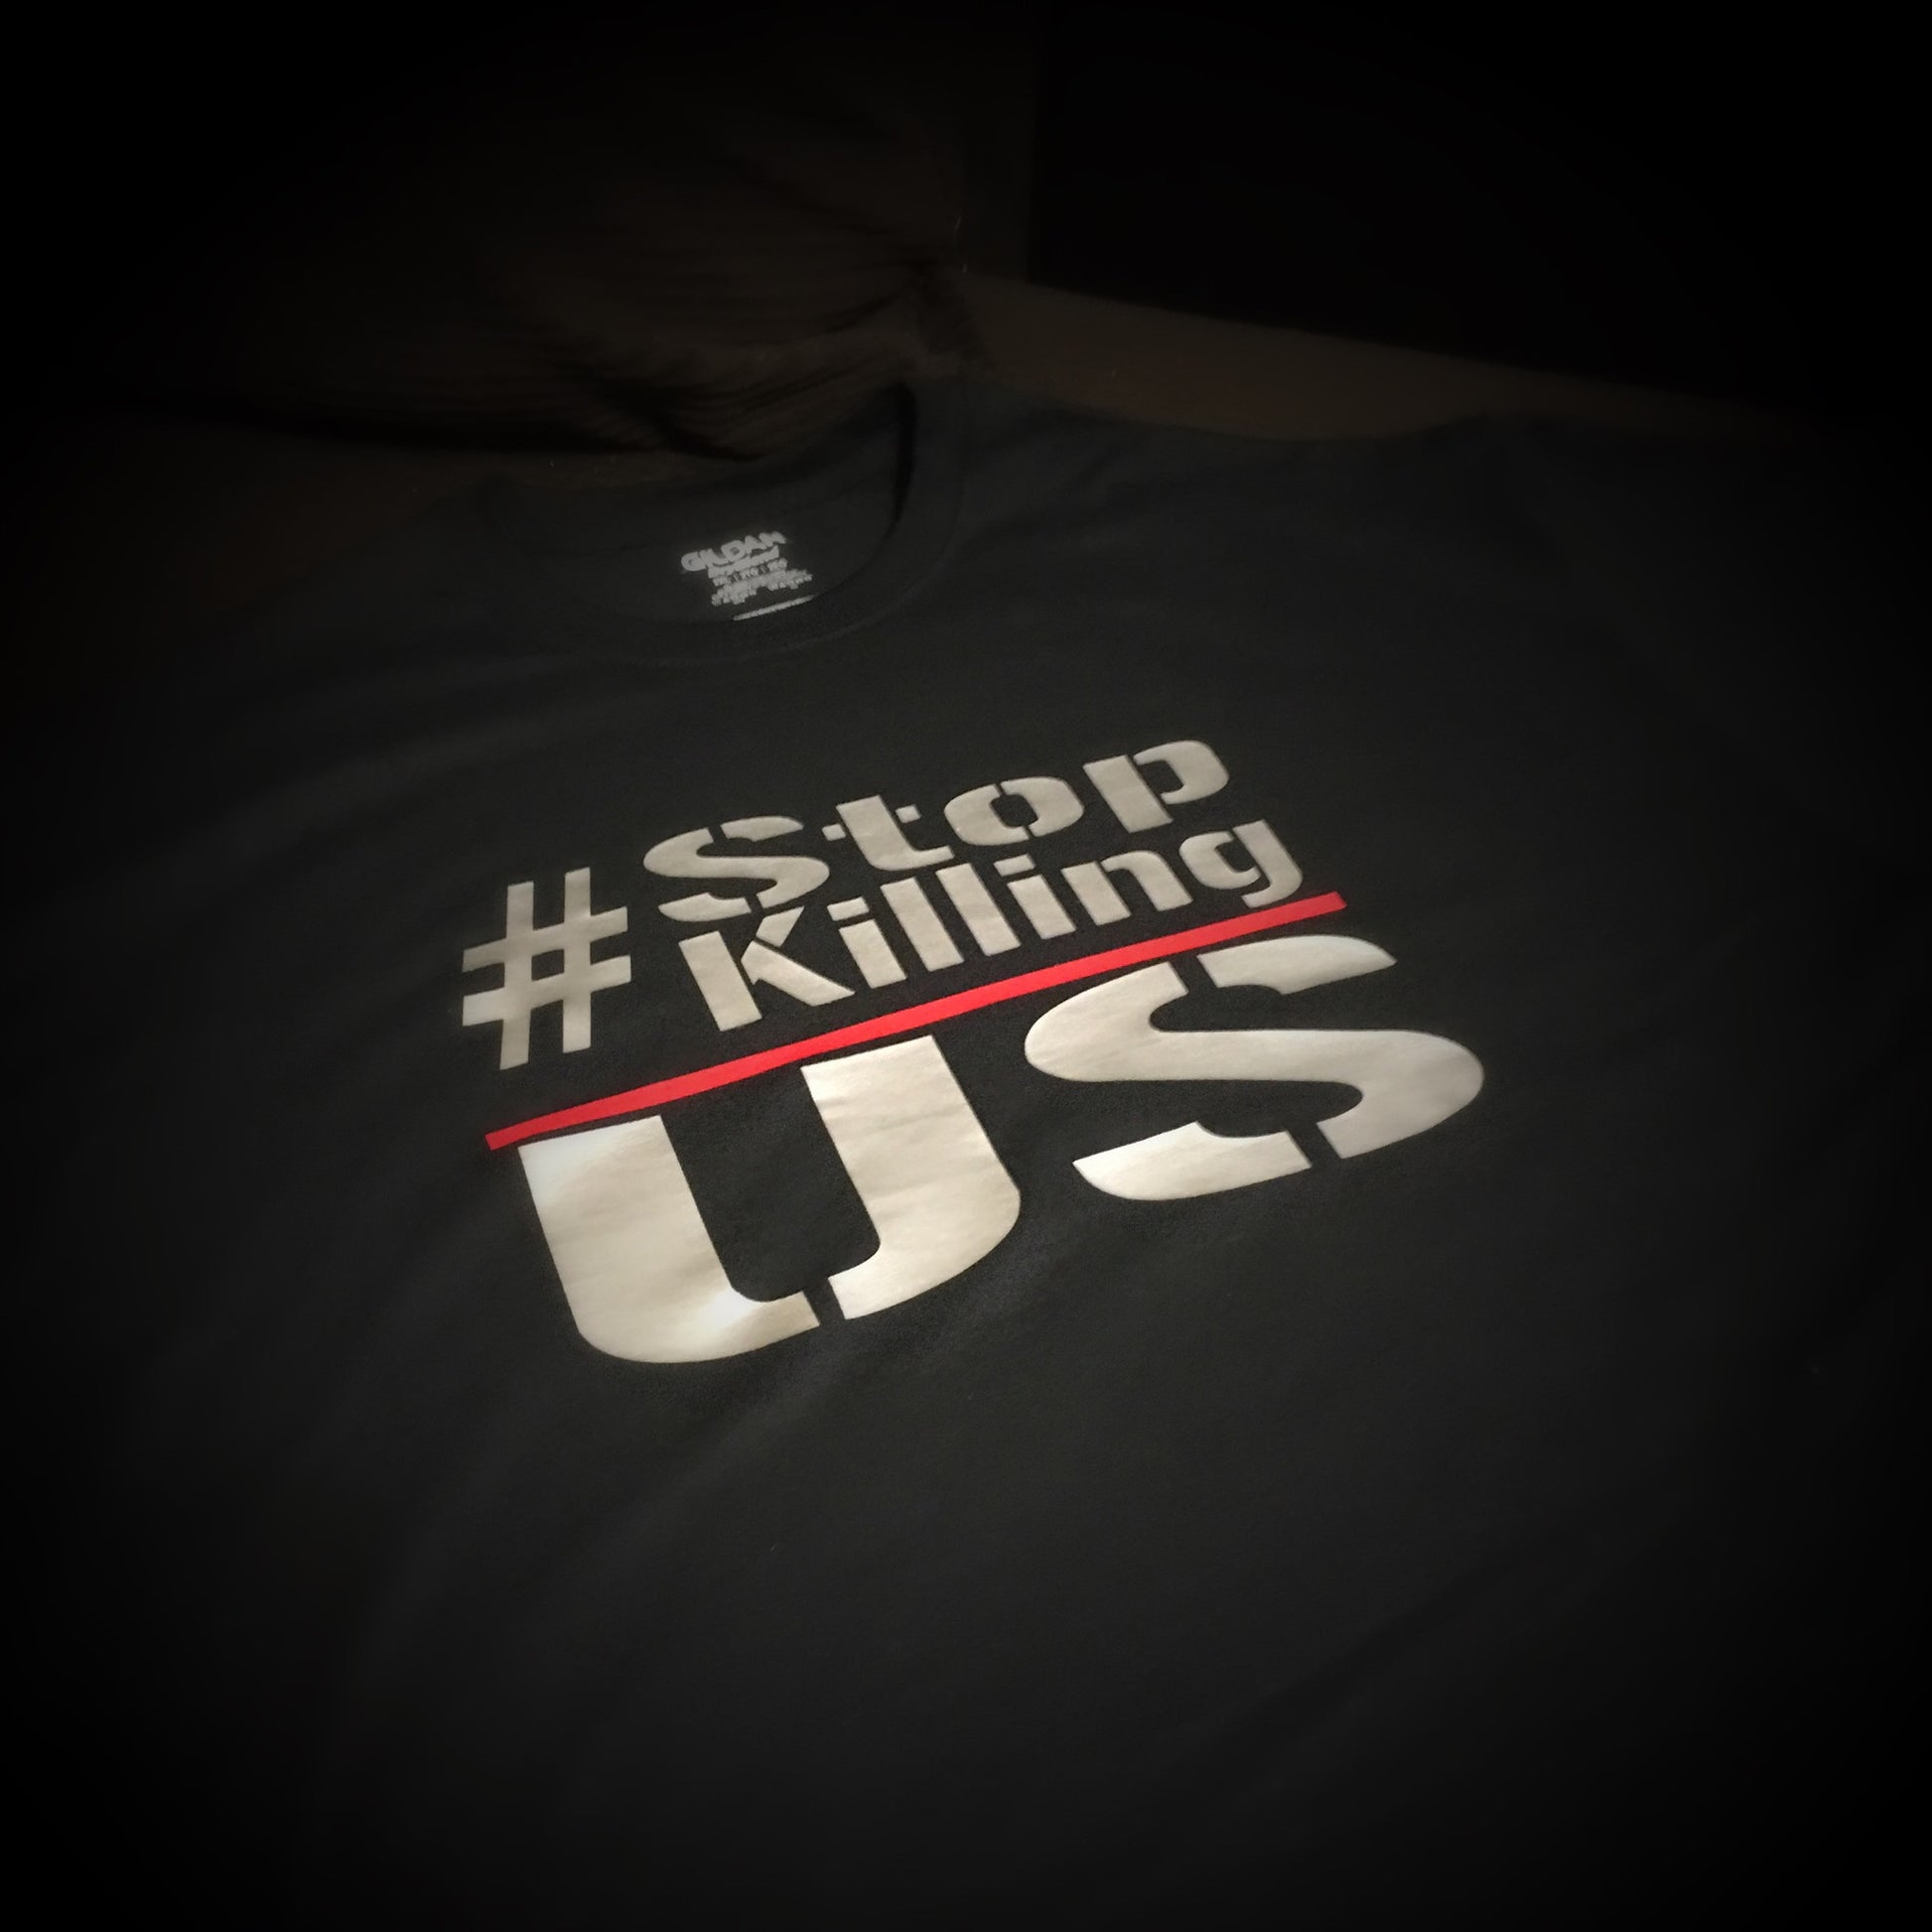 BLM - Stop Killing US - Silver | Black Lives Matter | Justice - T Shirt - 550strong